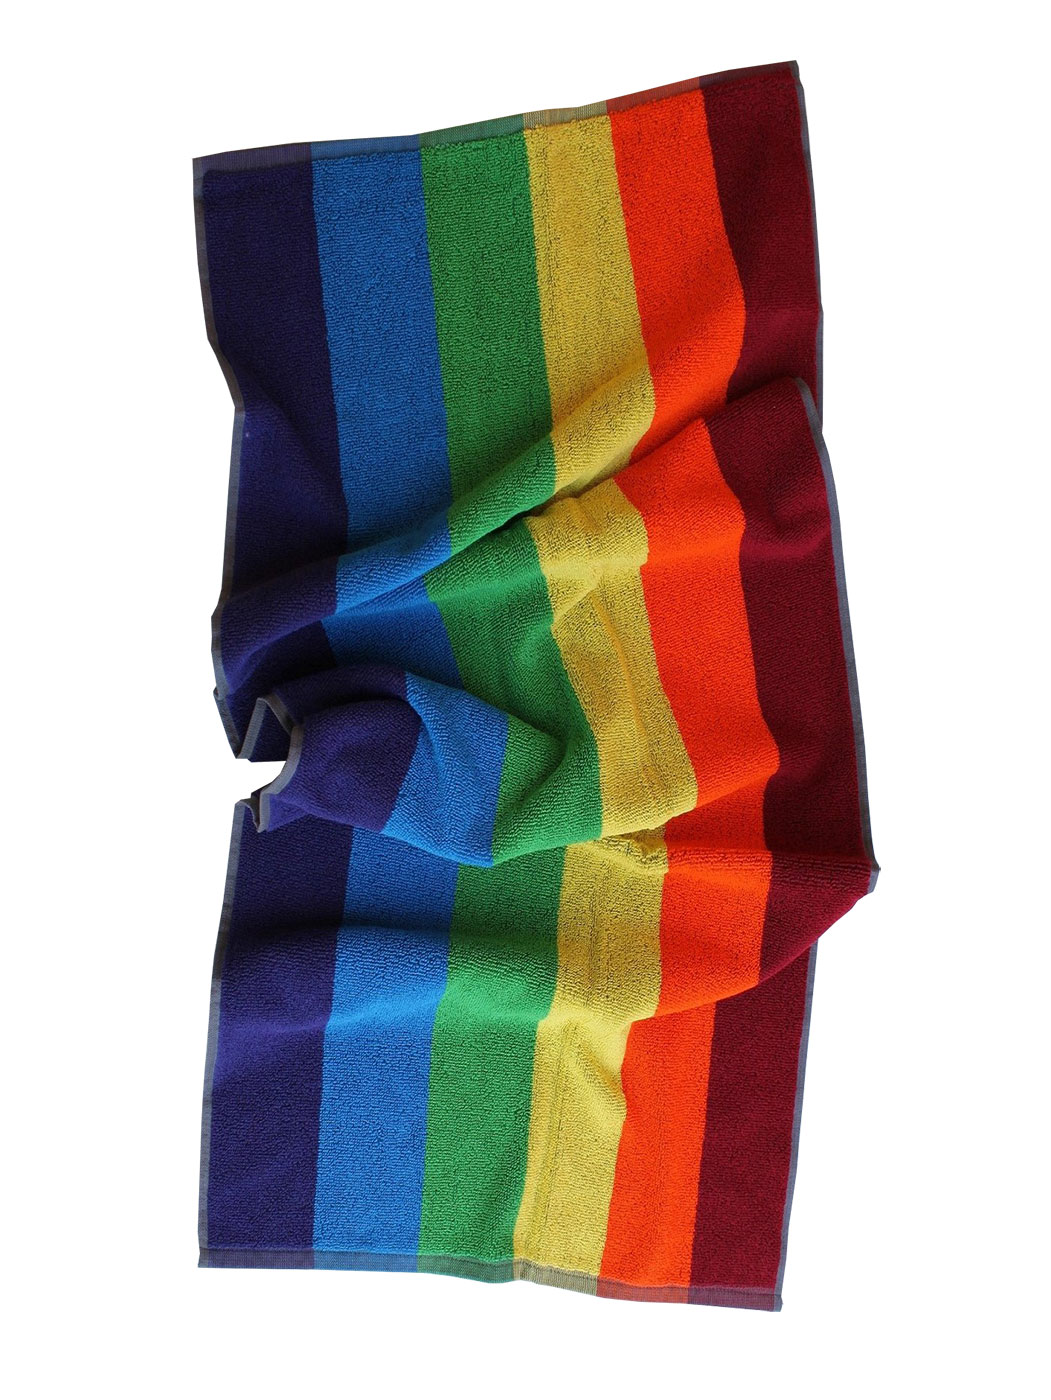 Regenbogen-Handtuch